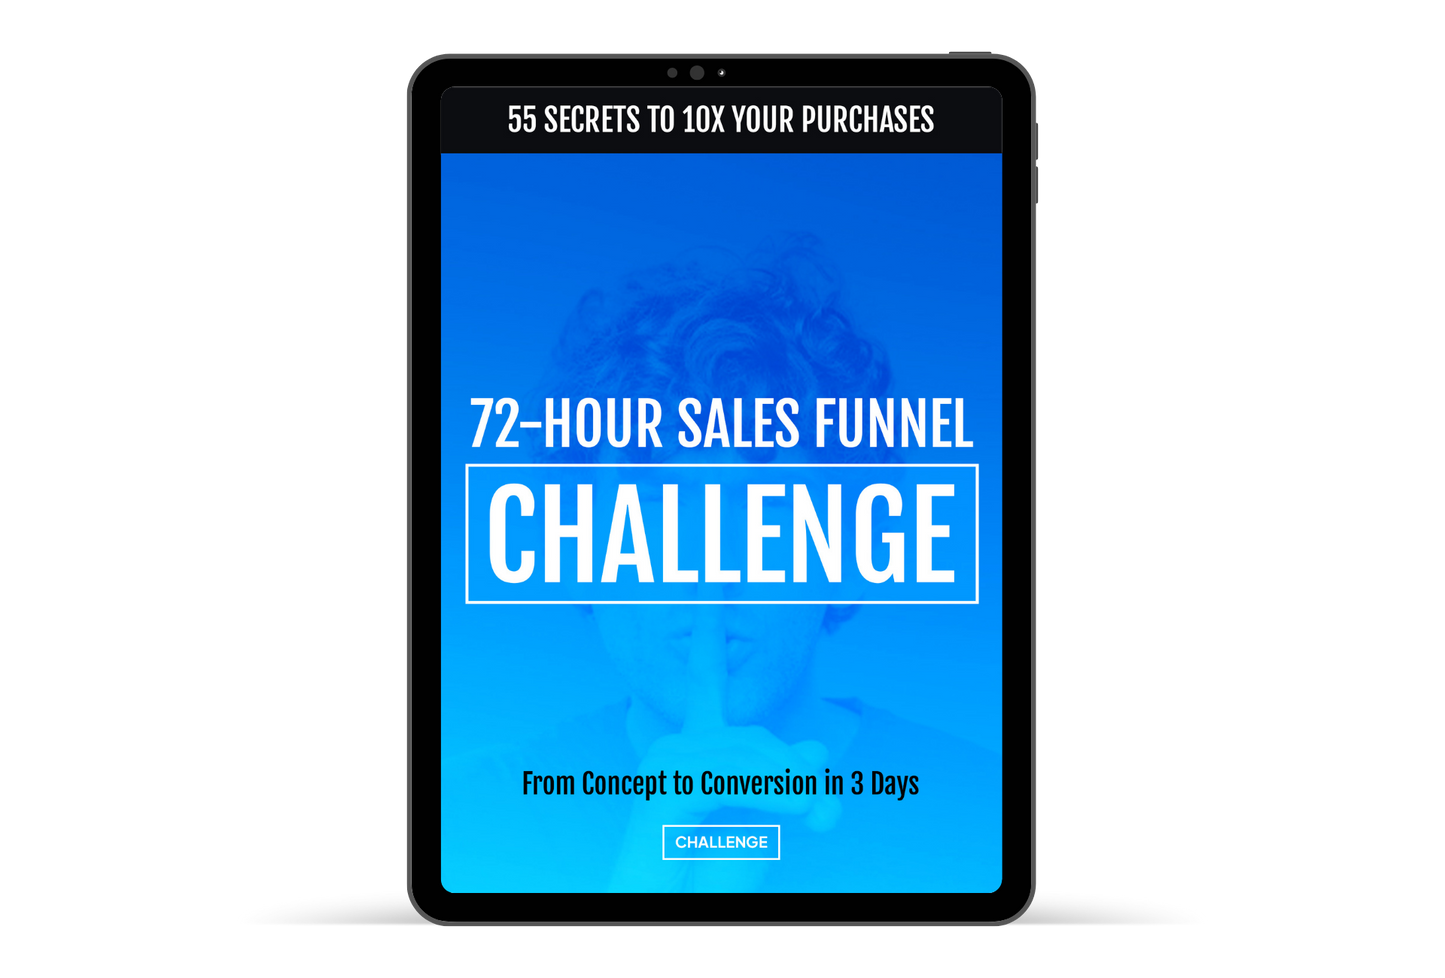 72-Hour Sales Funnel Challenge